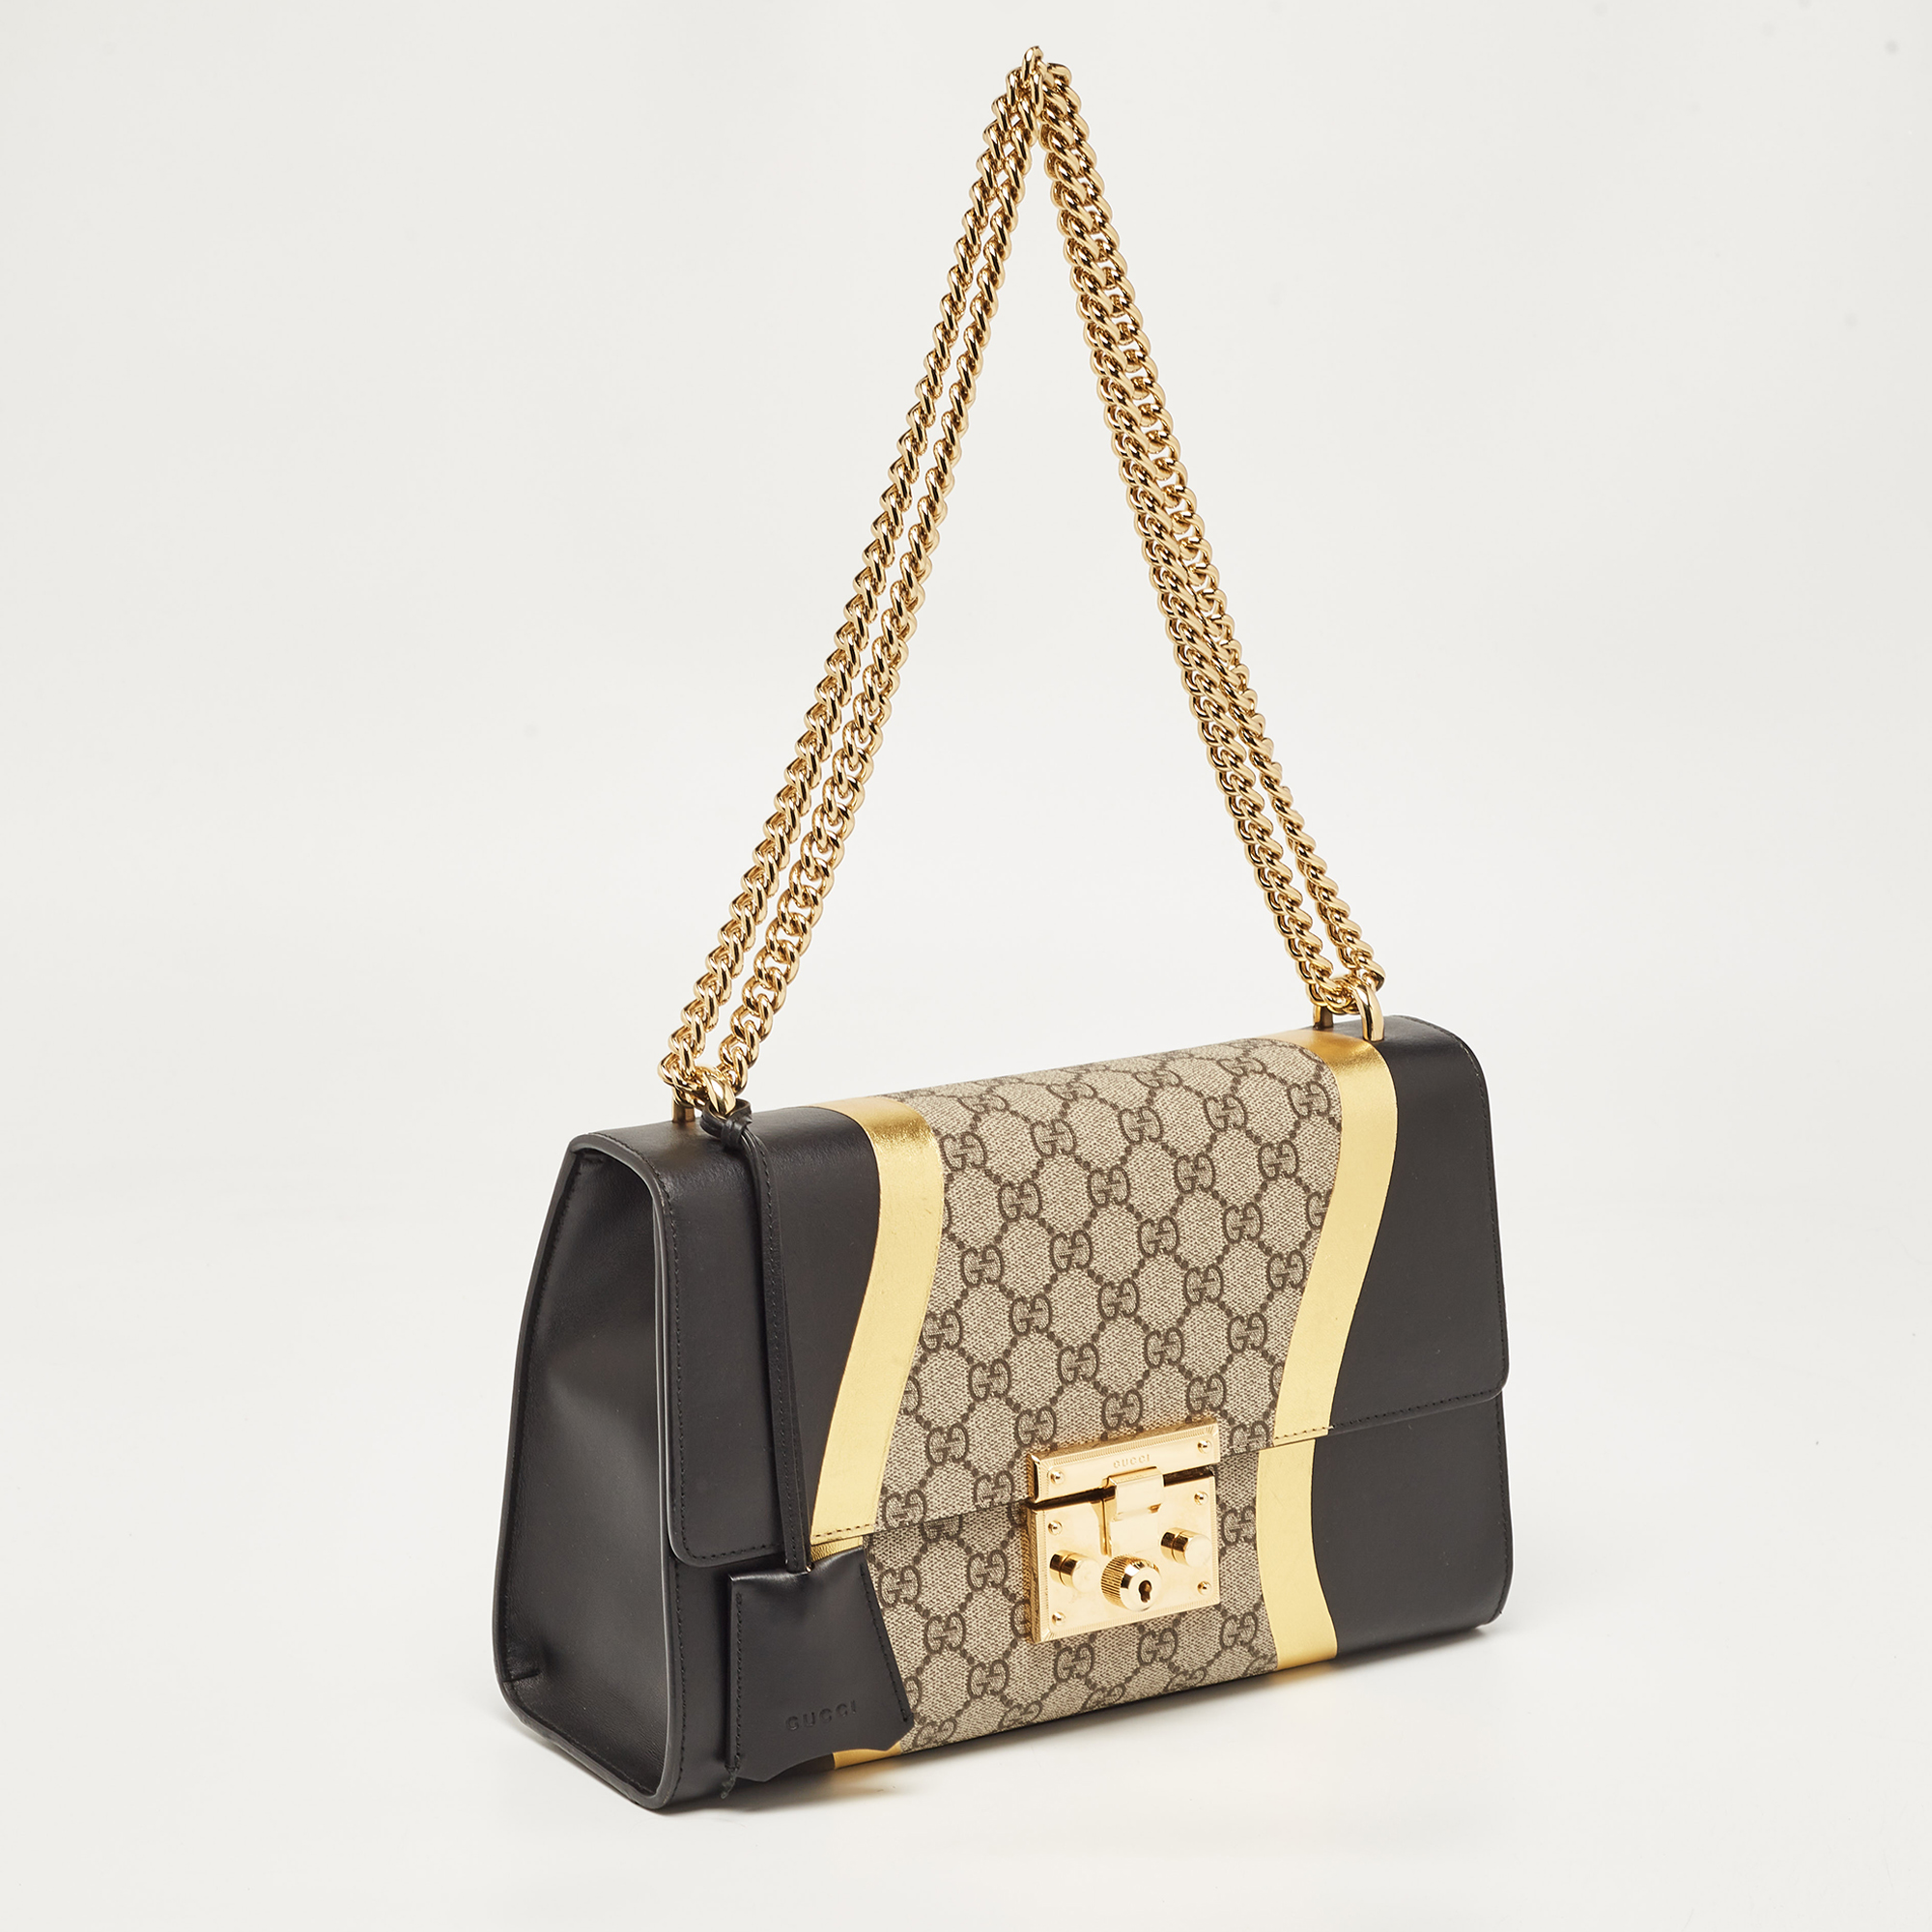 Gucci Tricolor GG Supreme Canvas And Leather Medium Padlock Shoulder Bag